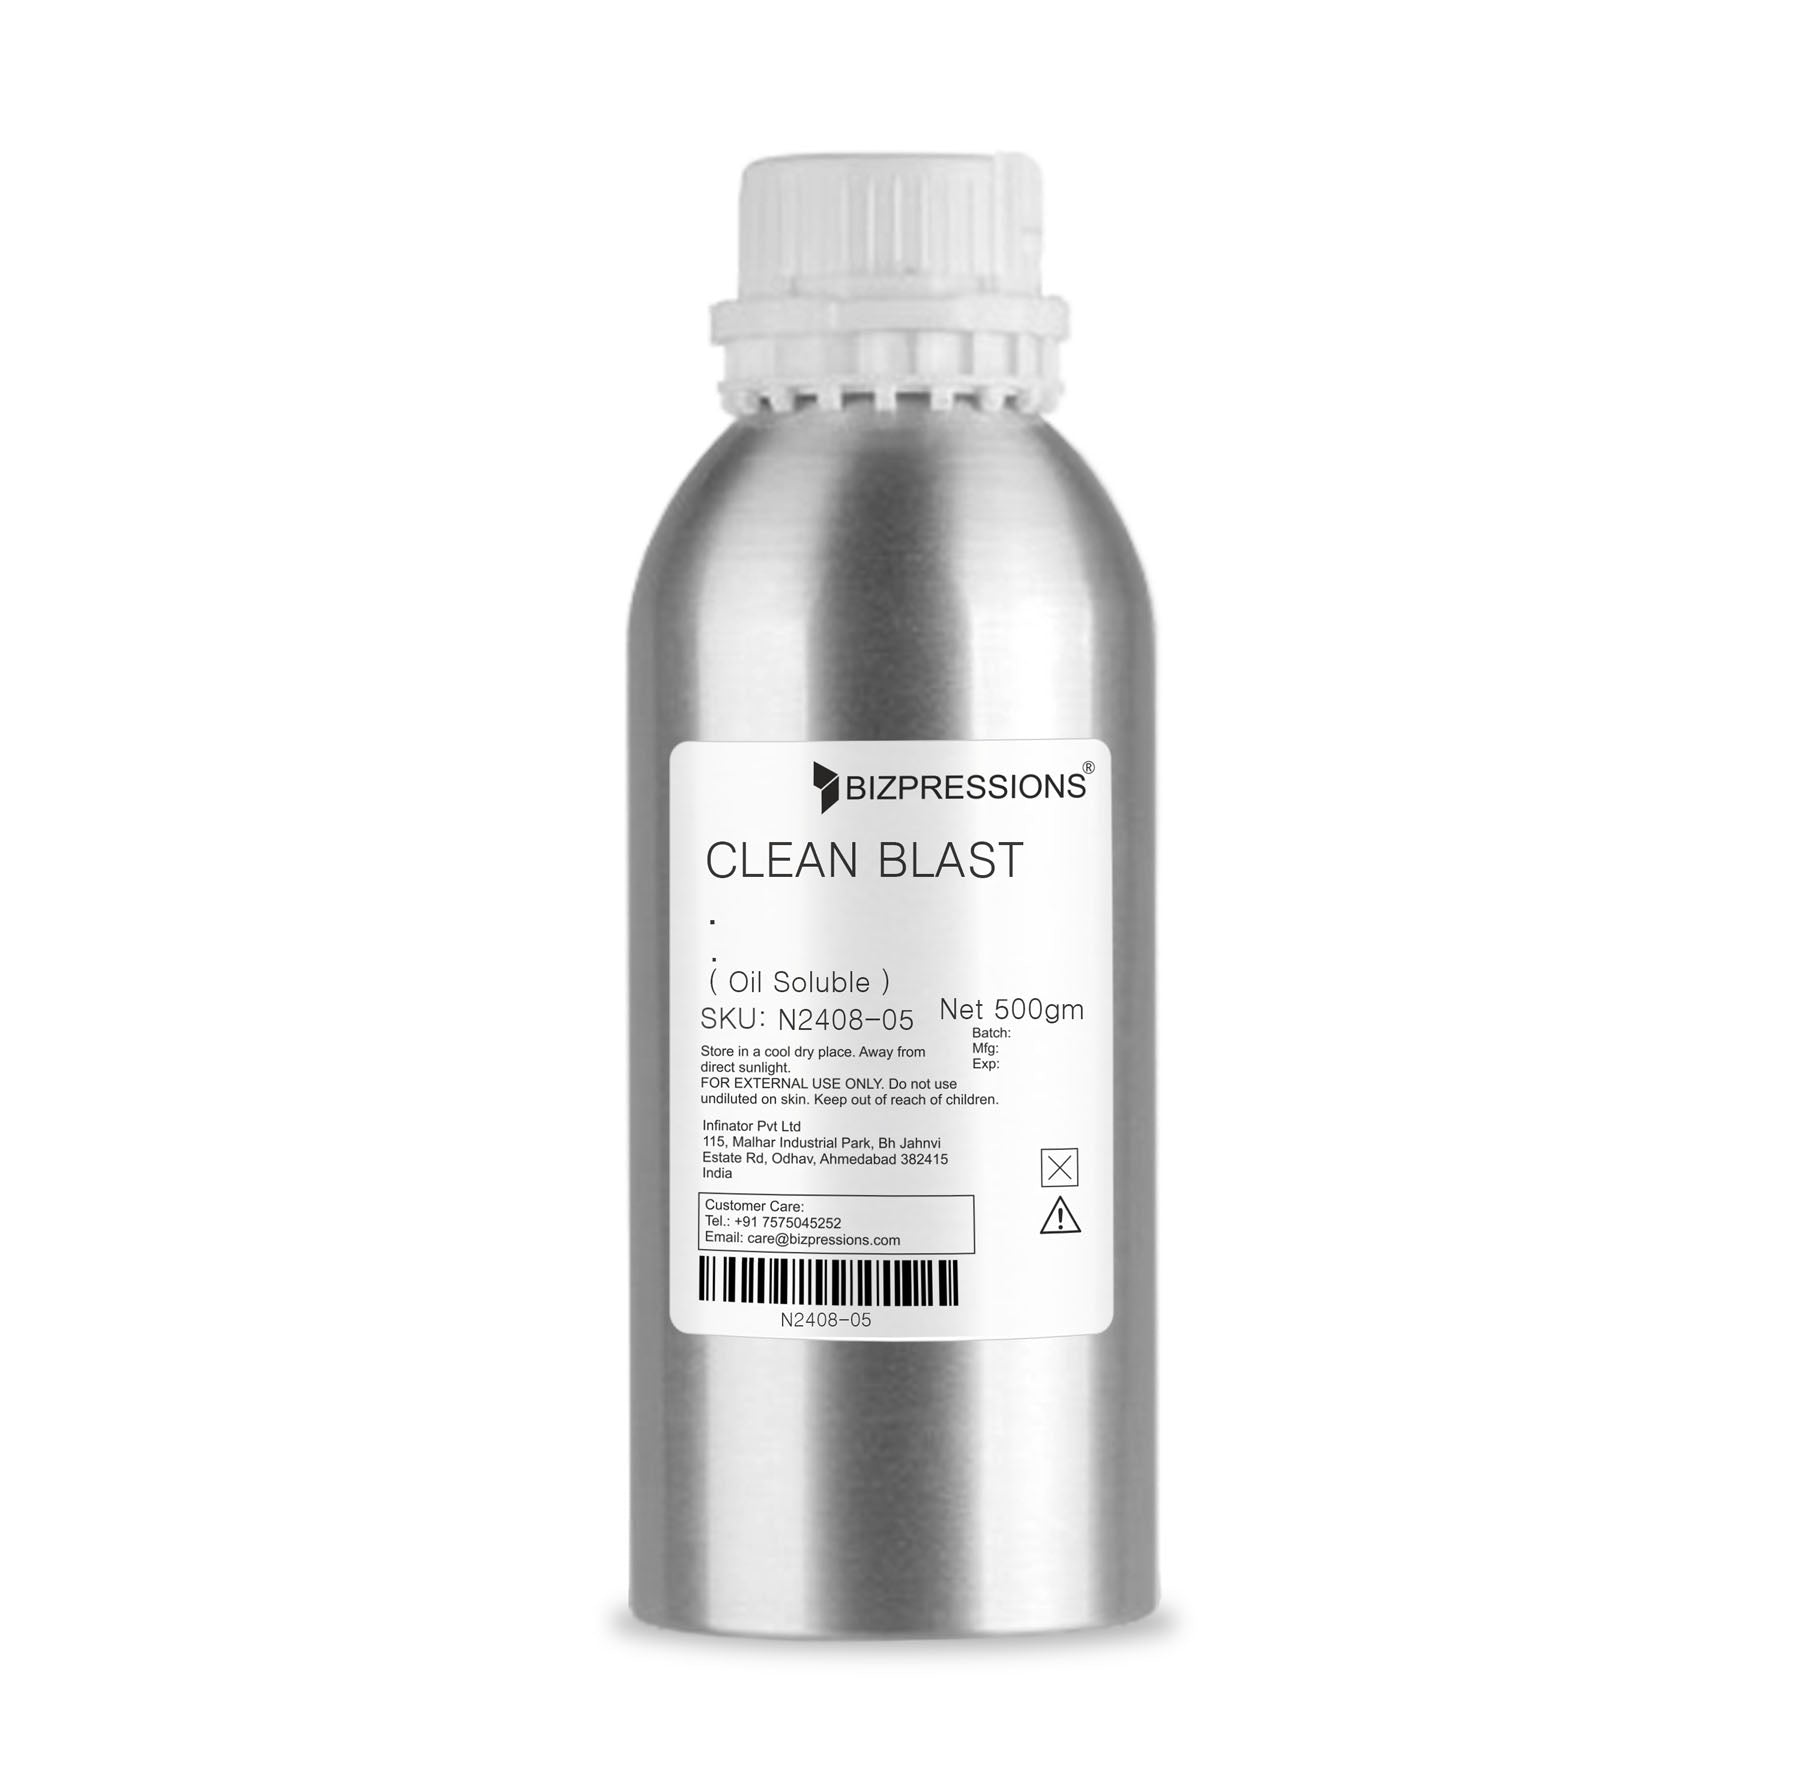 CLEAN BLAST - Fragrance ( Oil Soluble ) - 500 gm